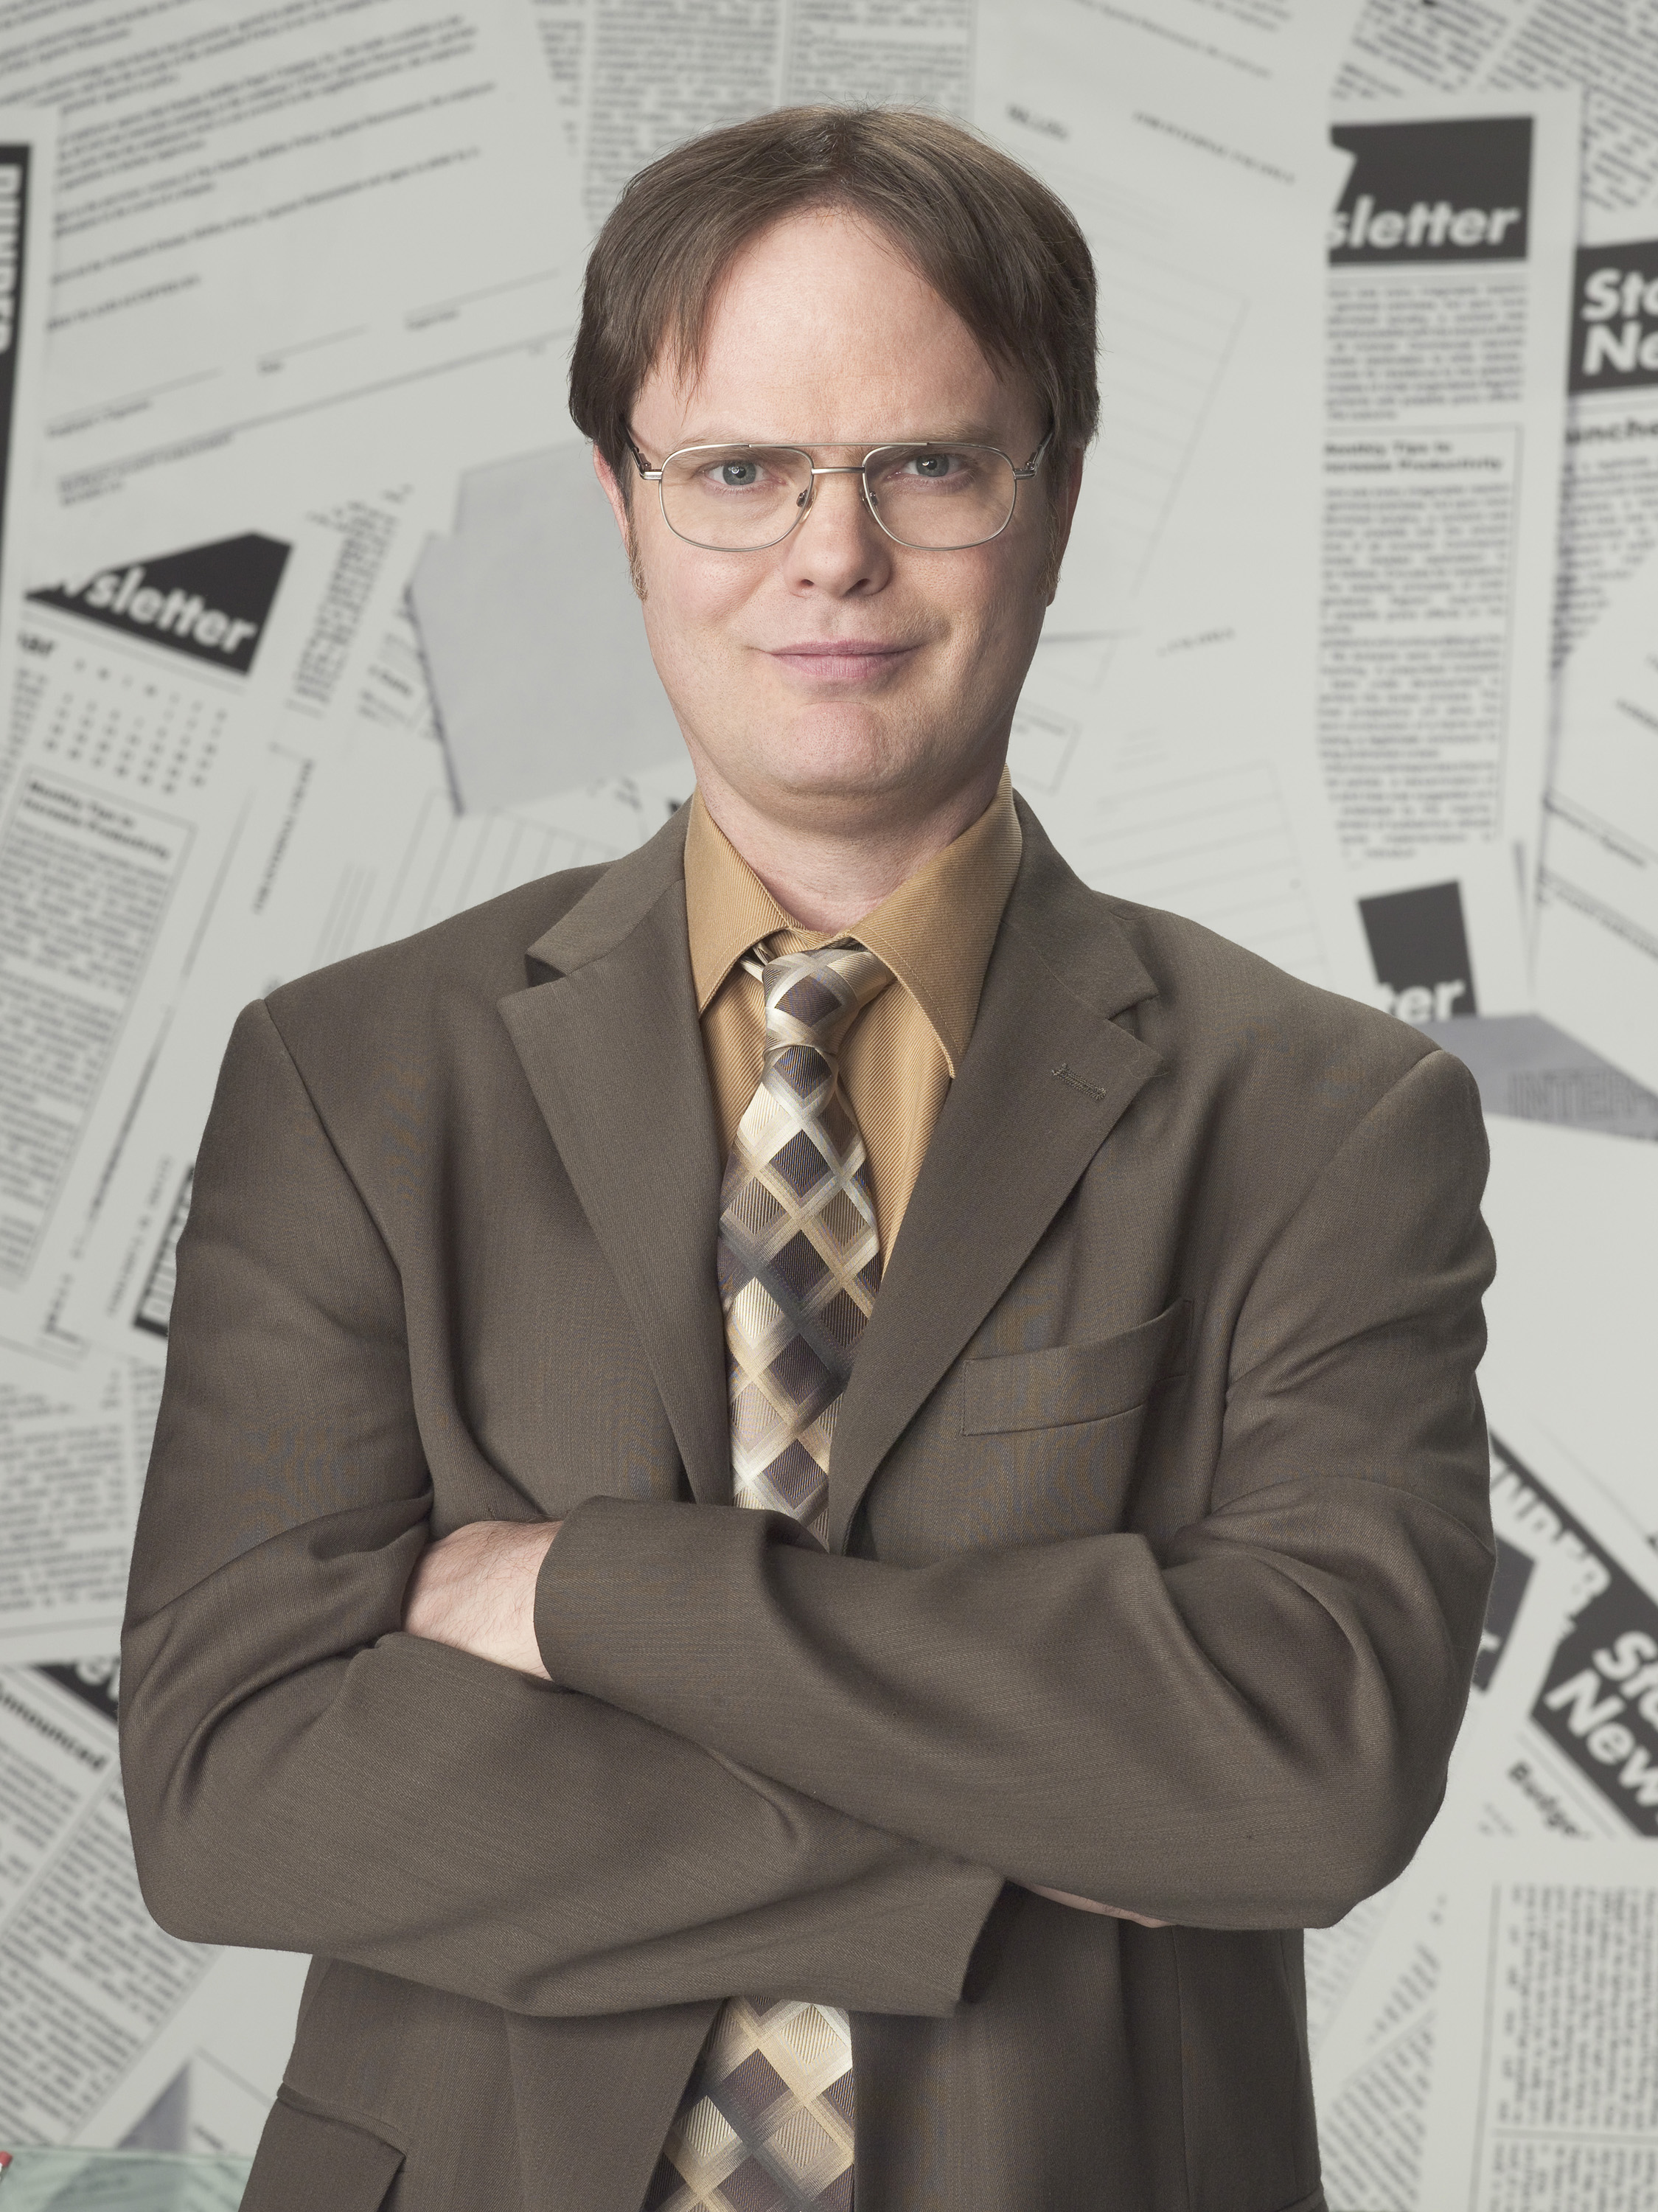 Dwight Schrute | Dunderpedia: The Office Wiki | Fandom